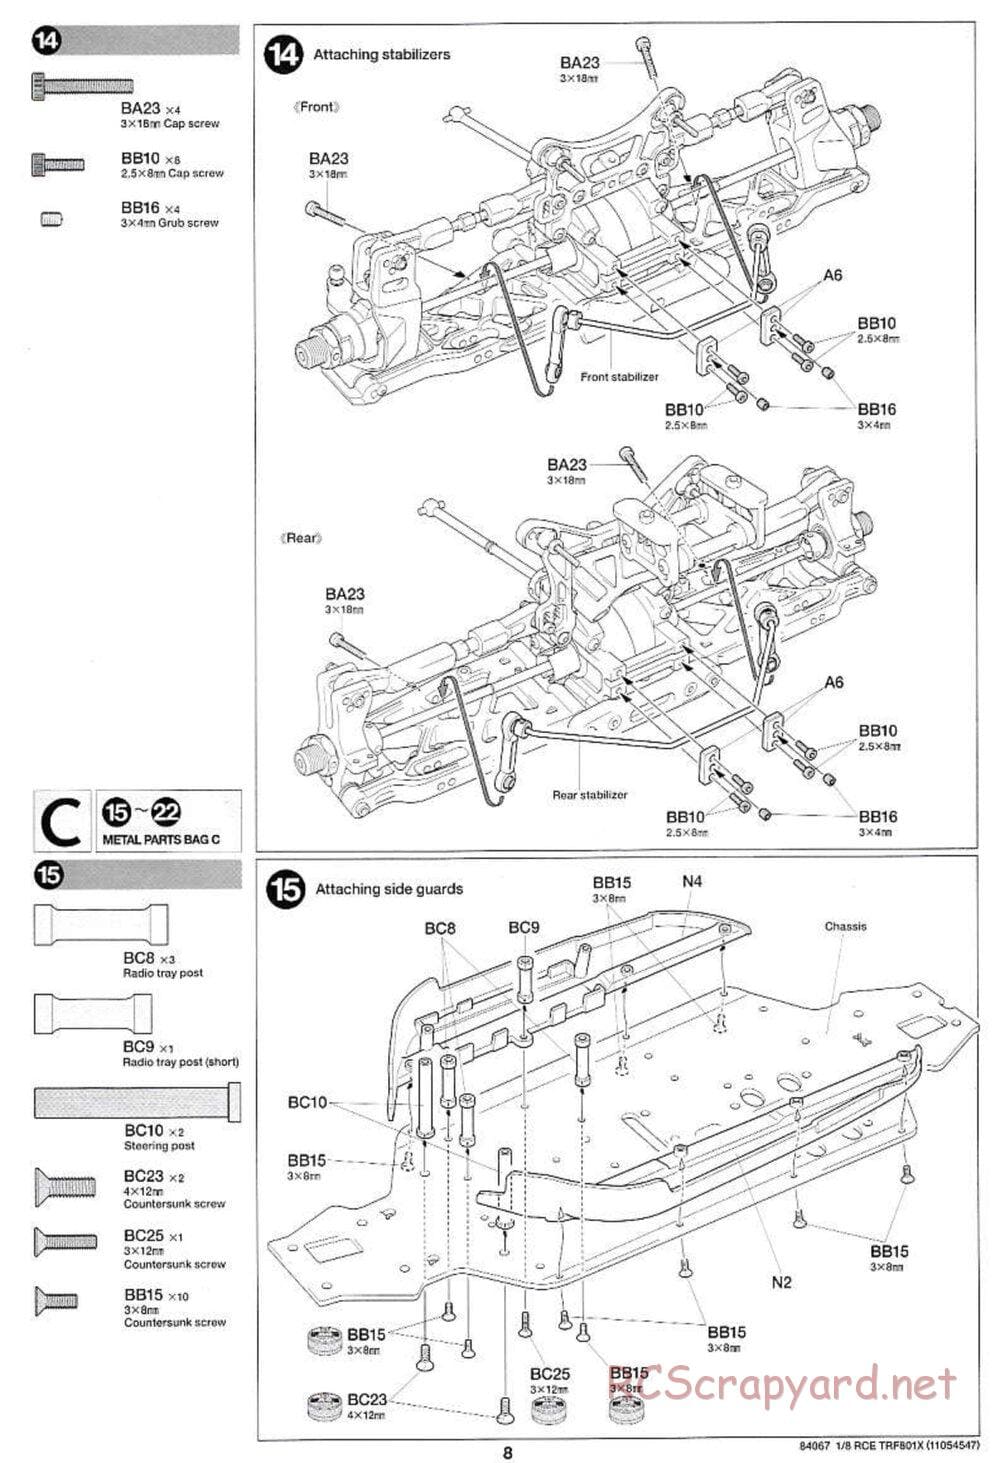 Tamiya - TRF801X Chassis - Manual - Page 8